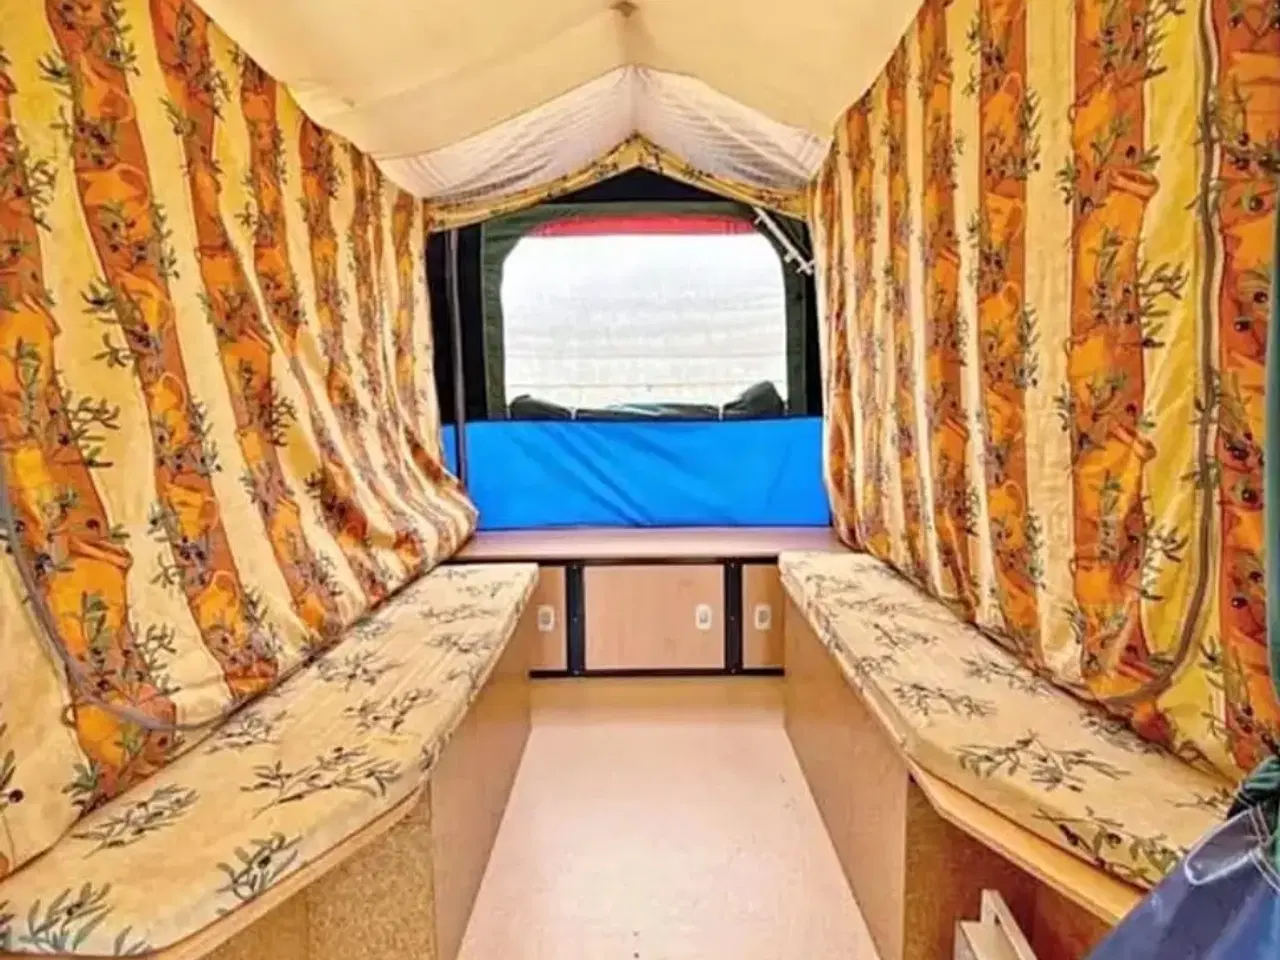 Billede 3 - Teltvogn som camping alternativ!